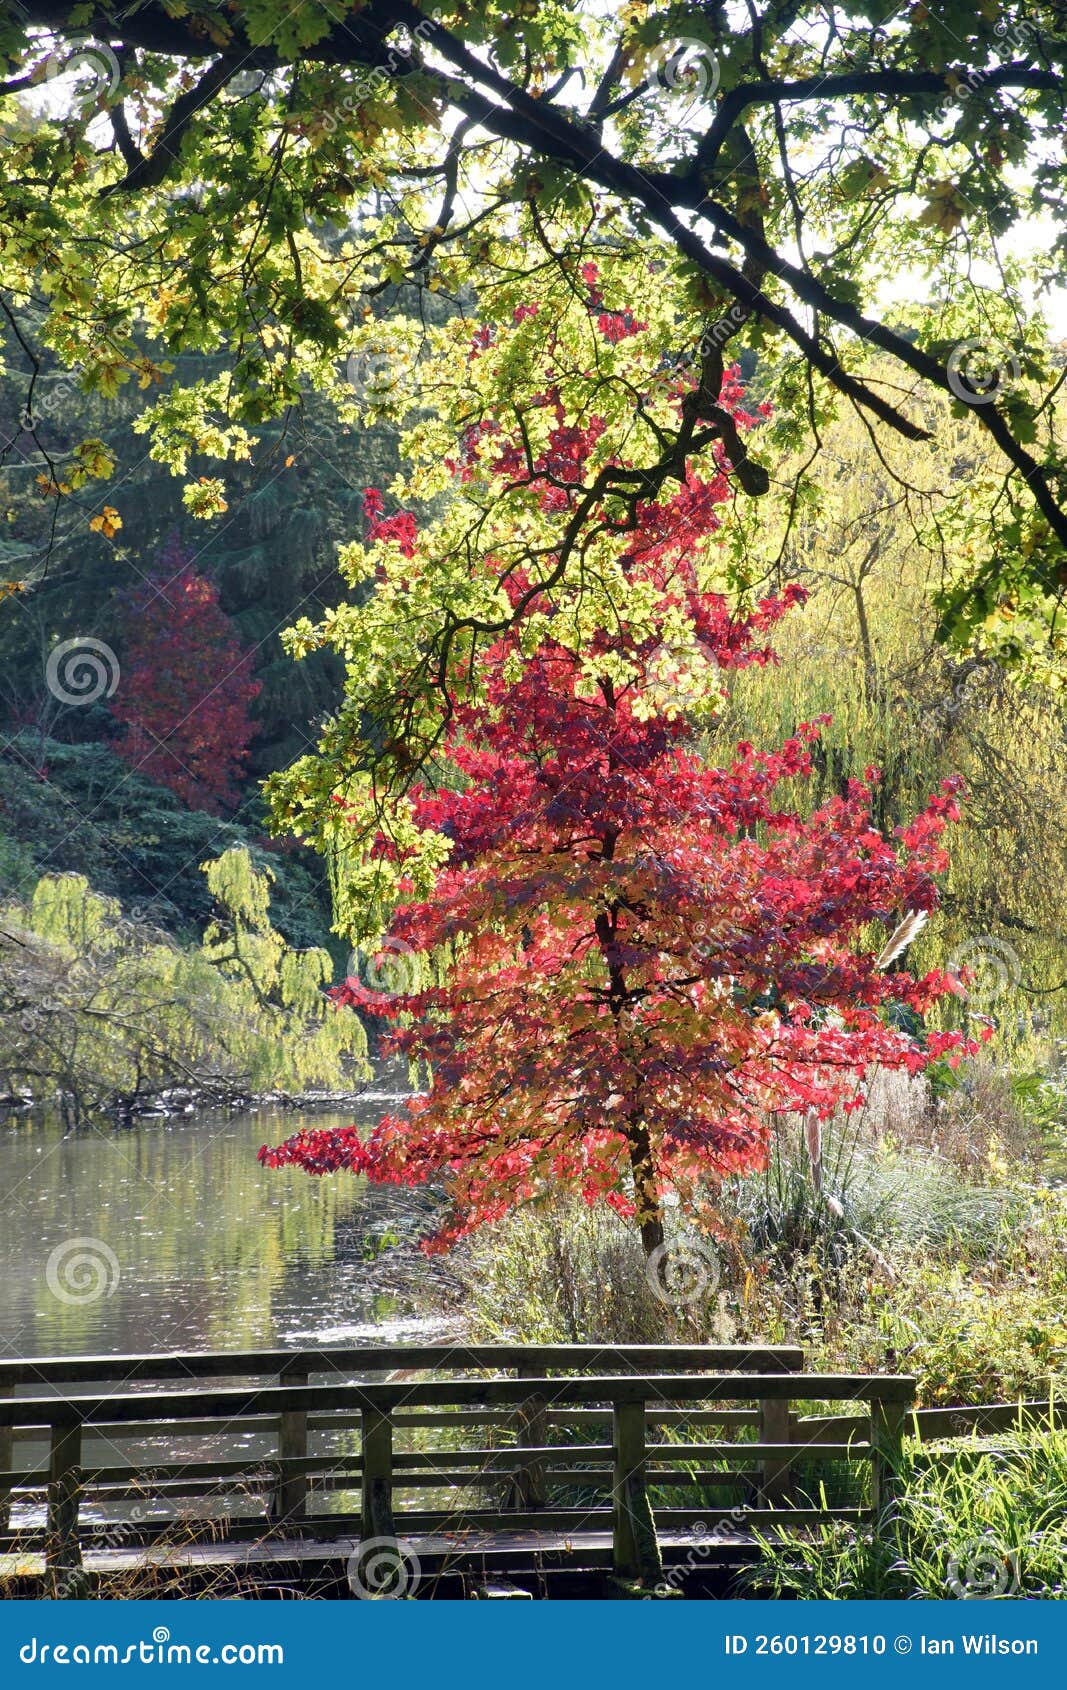 Temple Newsam Park Lake - Autumn Bridge Stock Photo - Image of fall ...